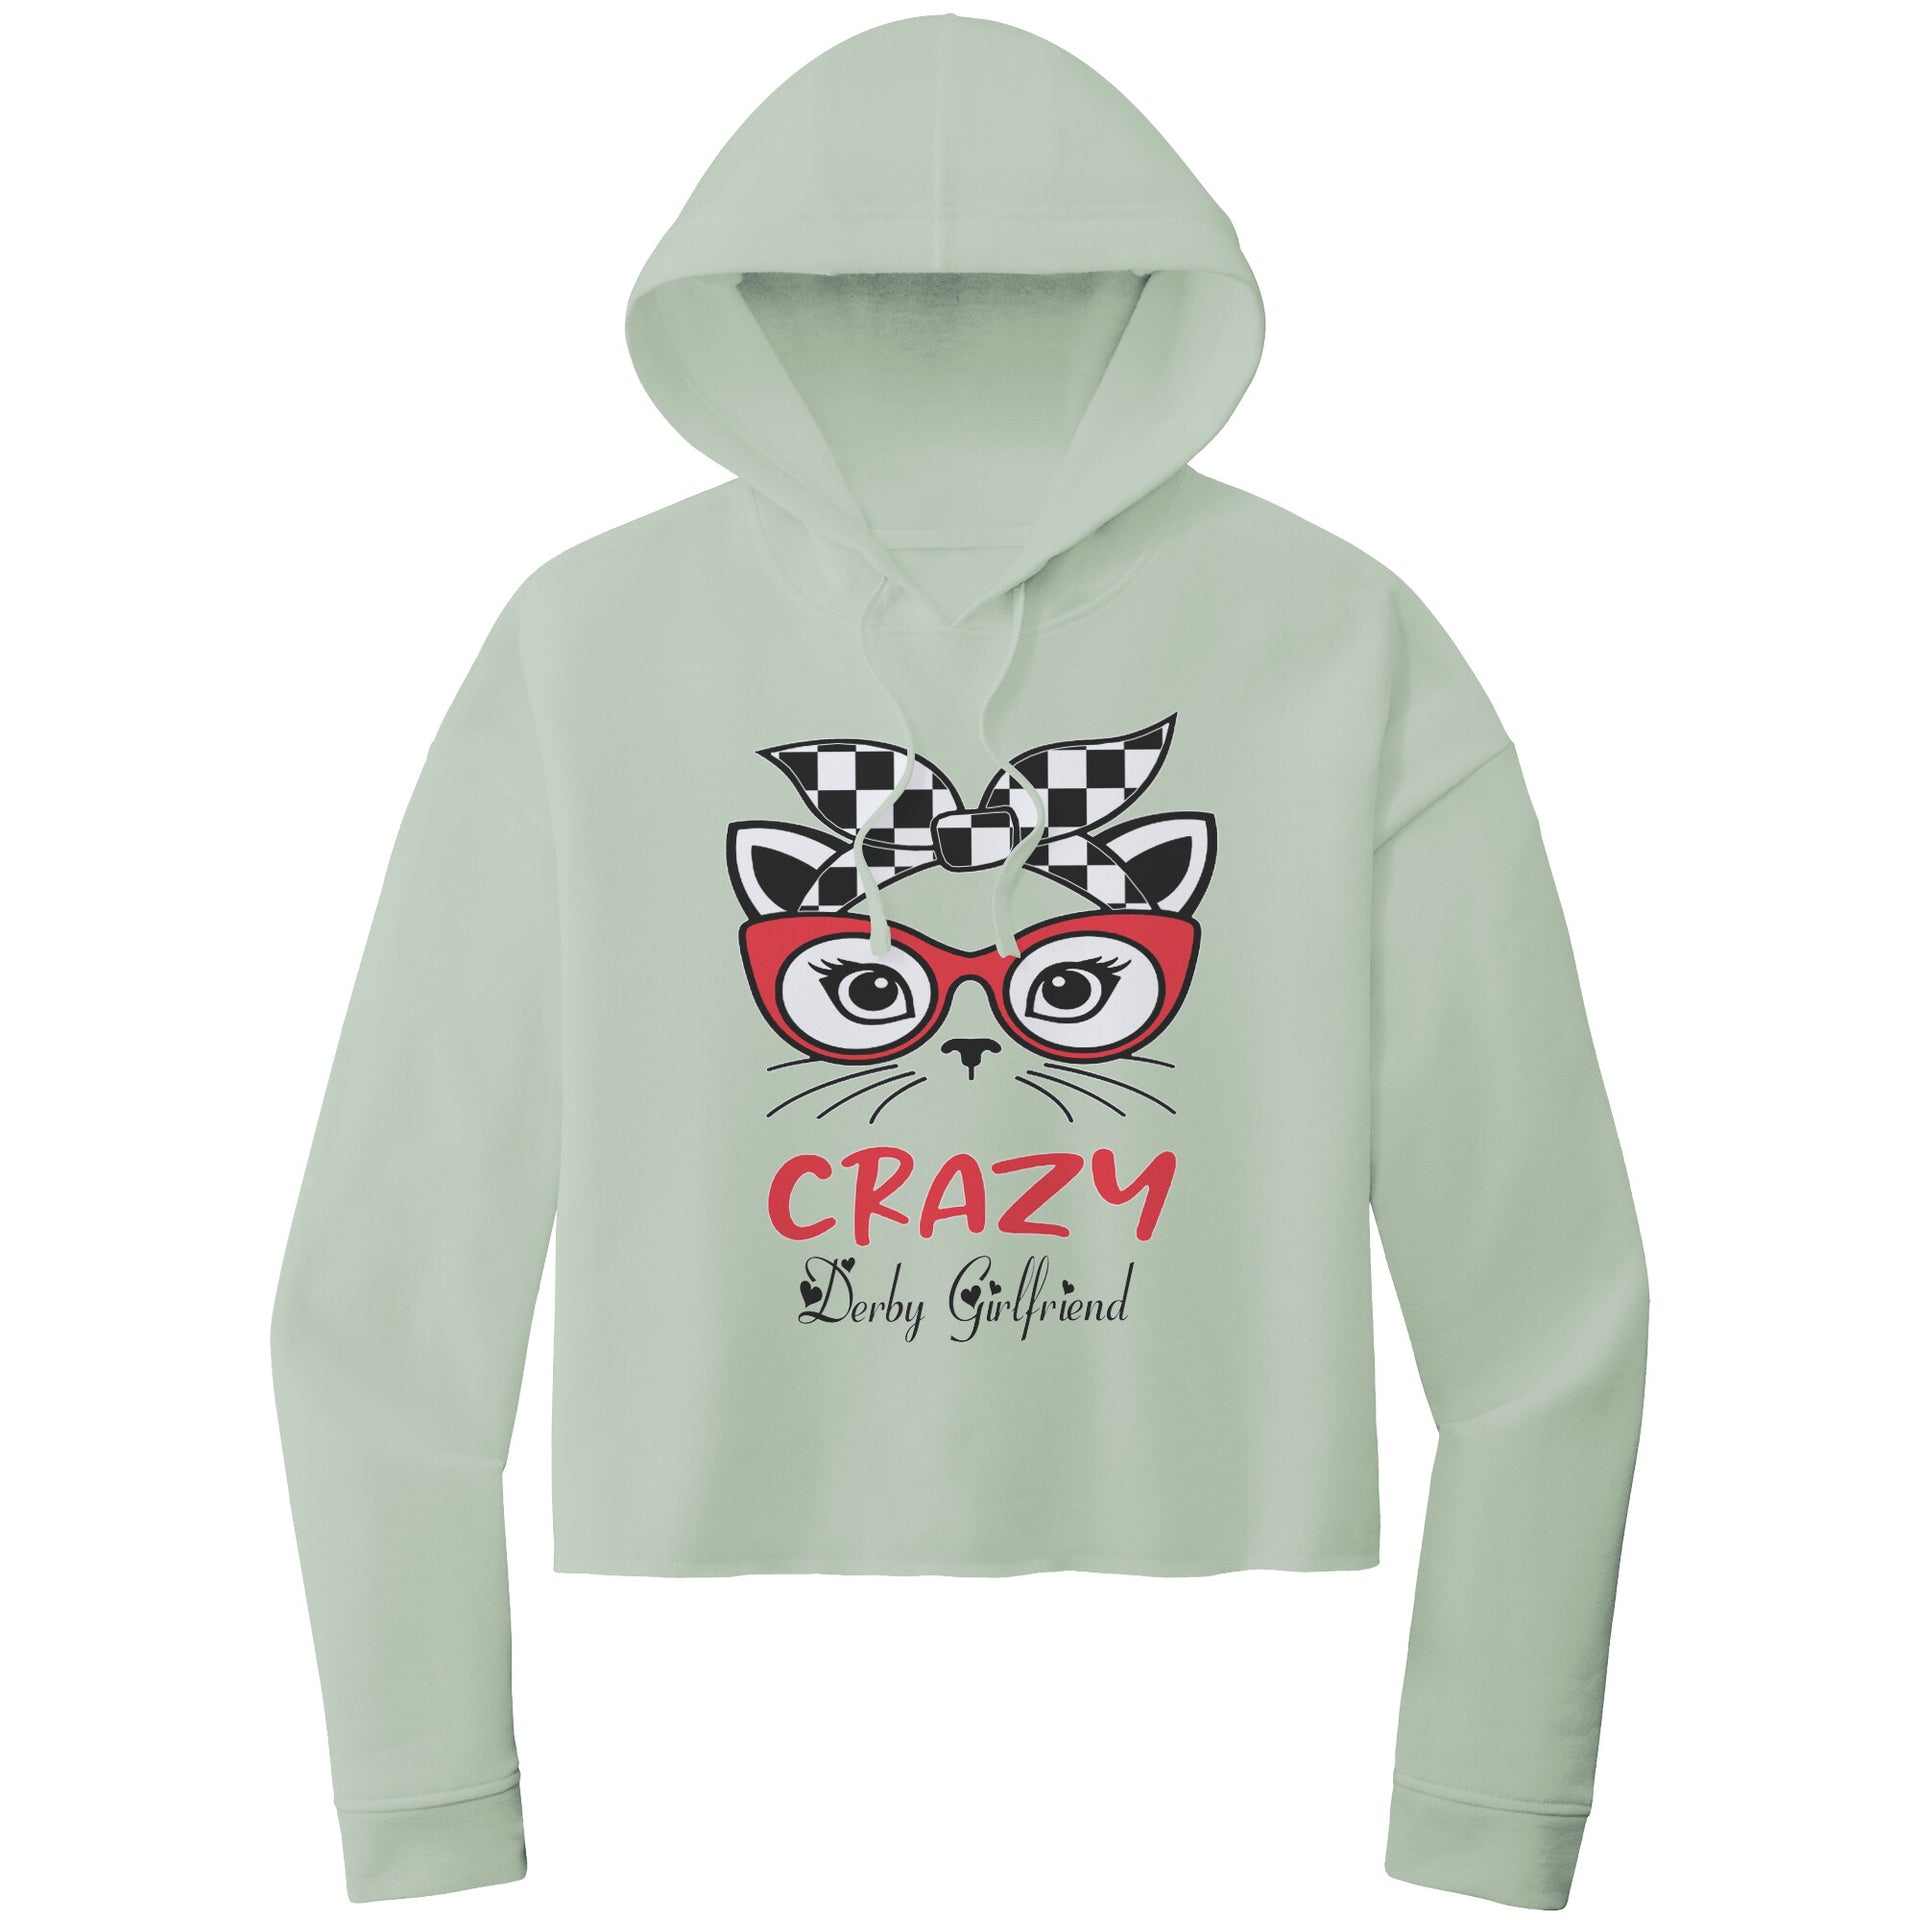 Crazy Derby girlfriend Crop Top hoodie